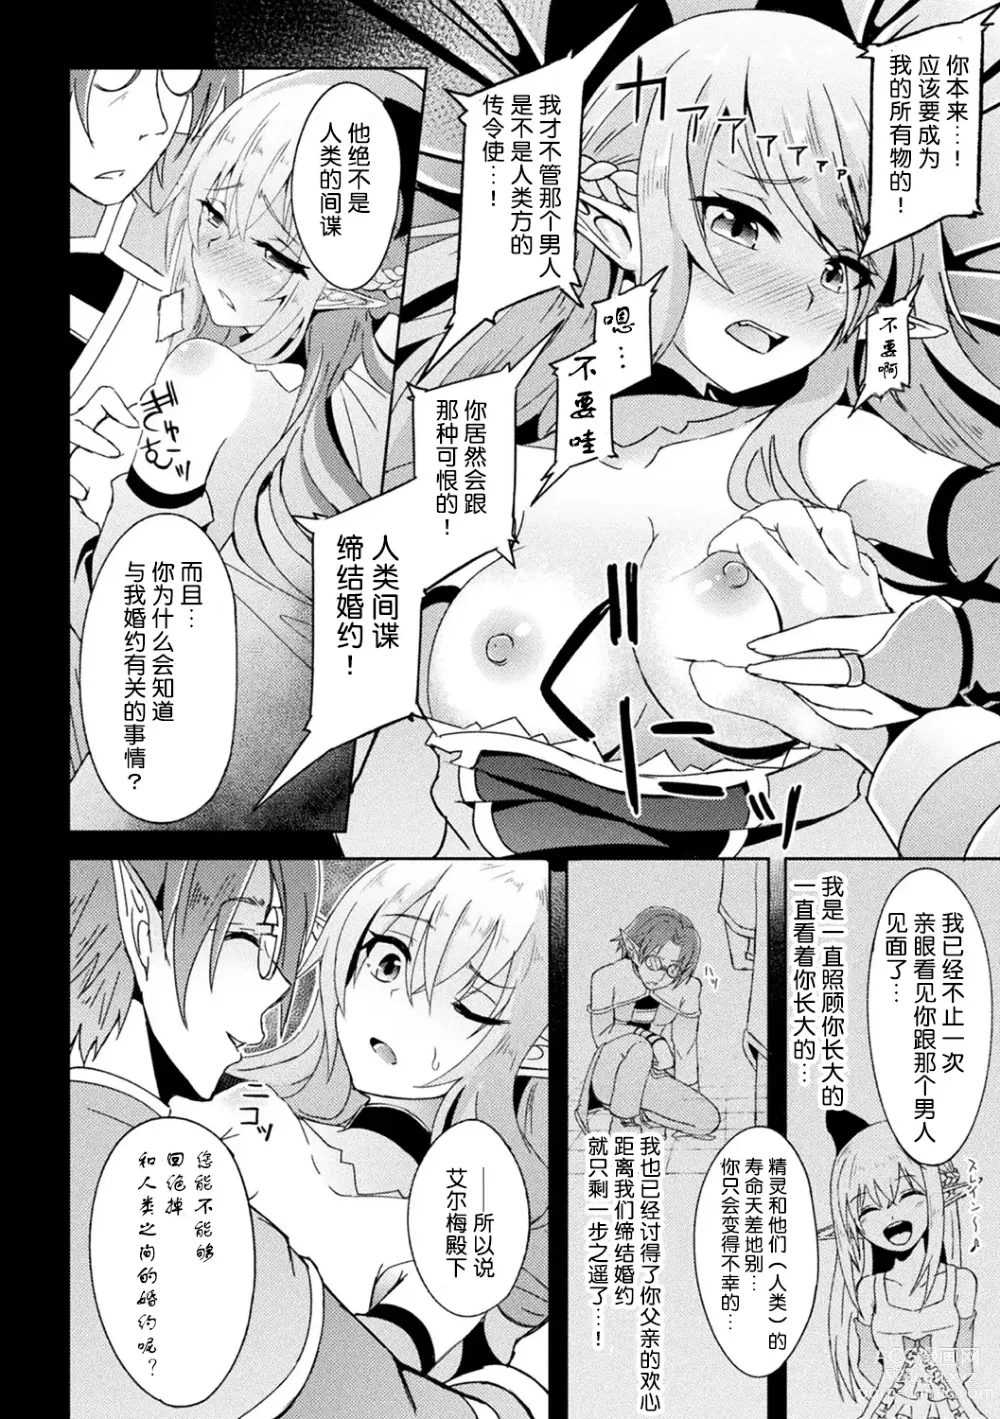 Page 4 of manga 精靈族良家公主殿下薬漬け公開陵辱